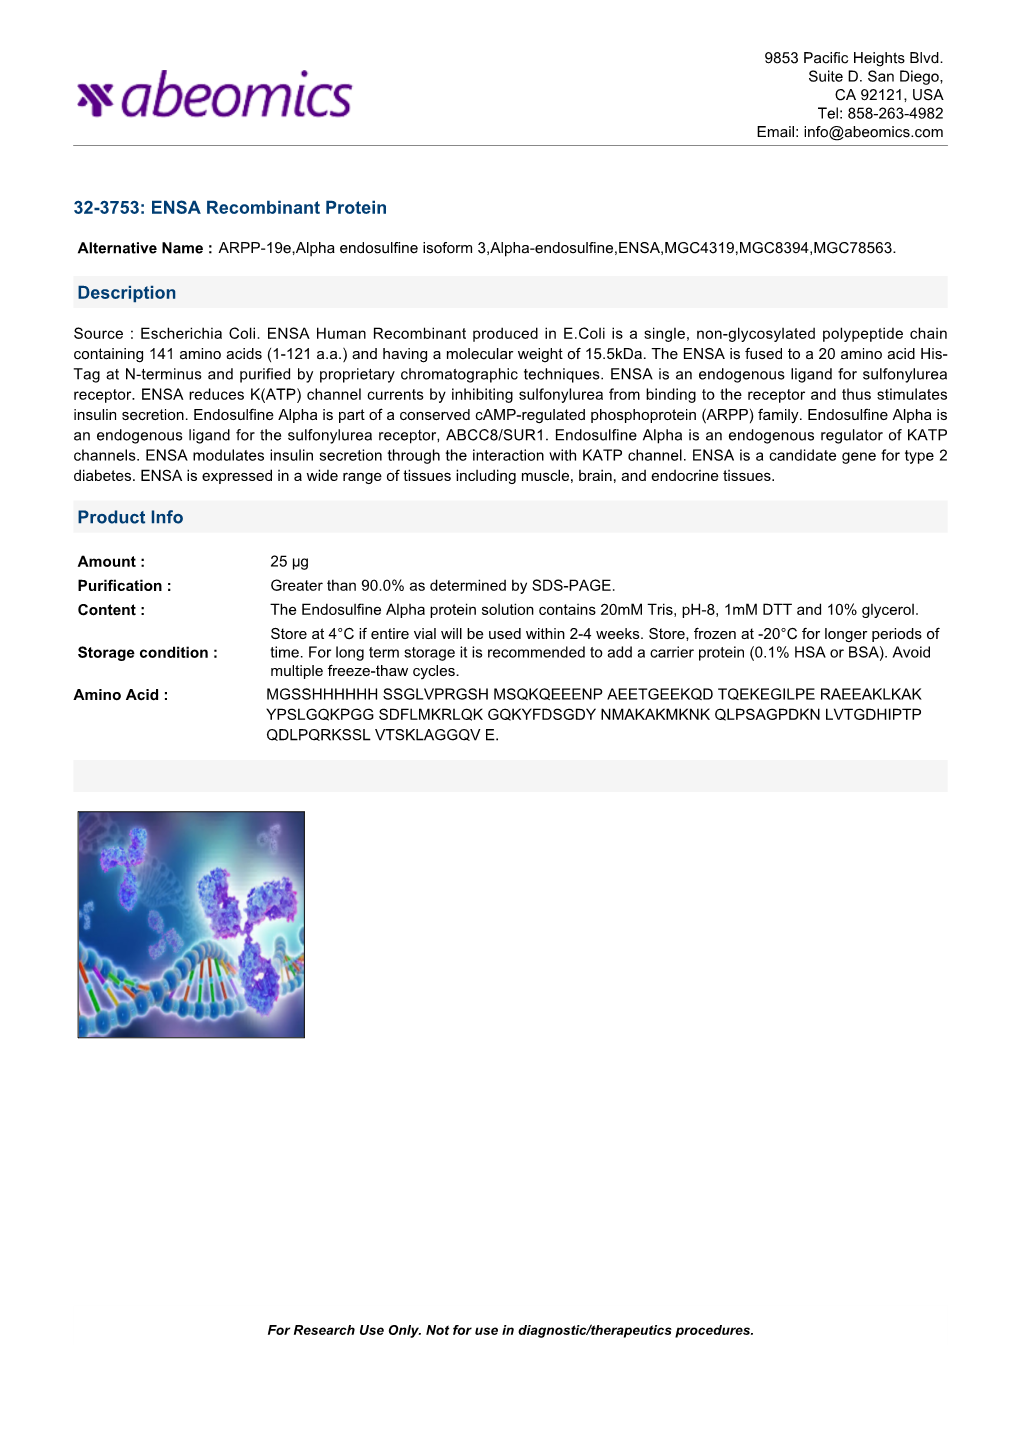 ENSA Recombinant Protein Description Product Info